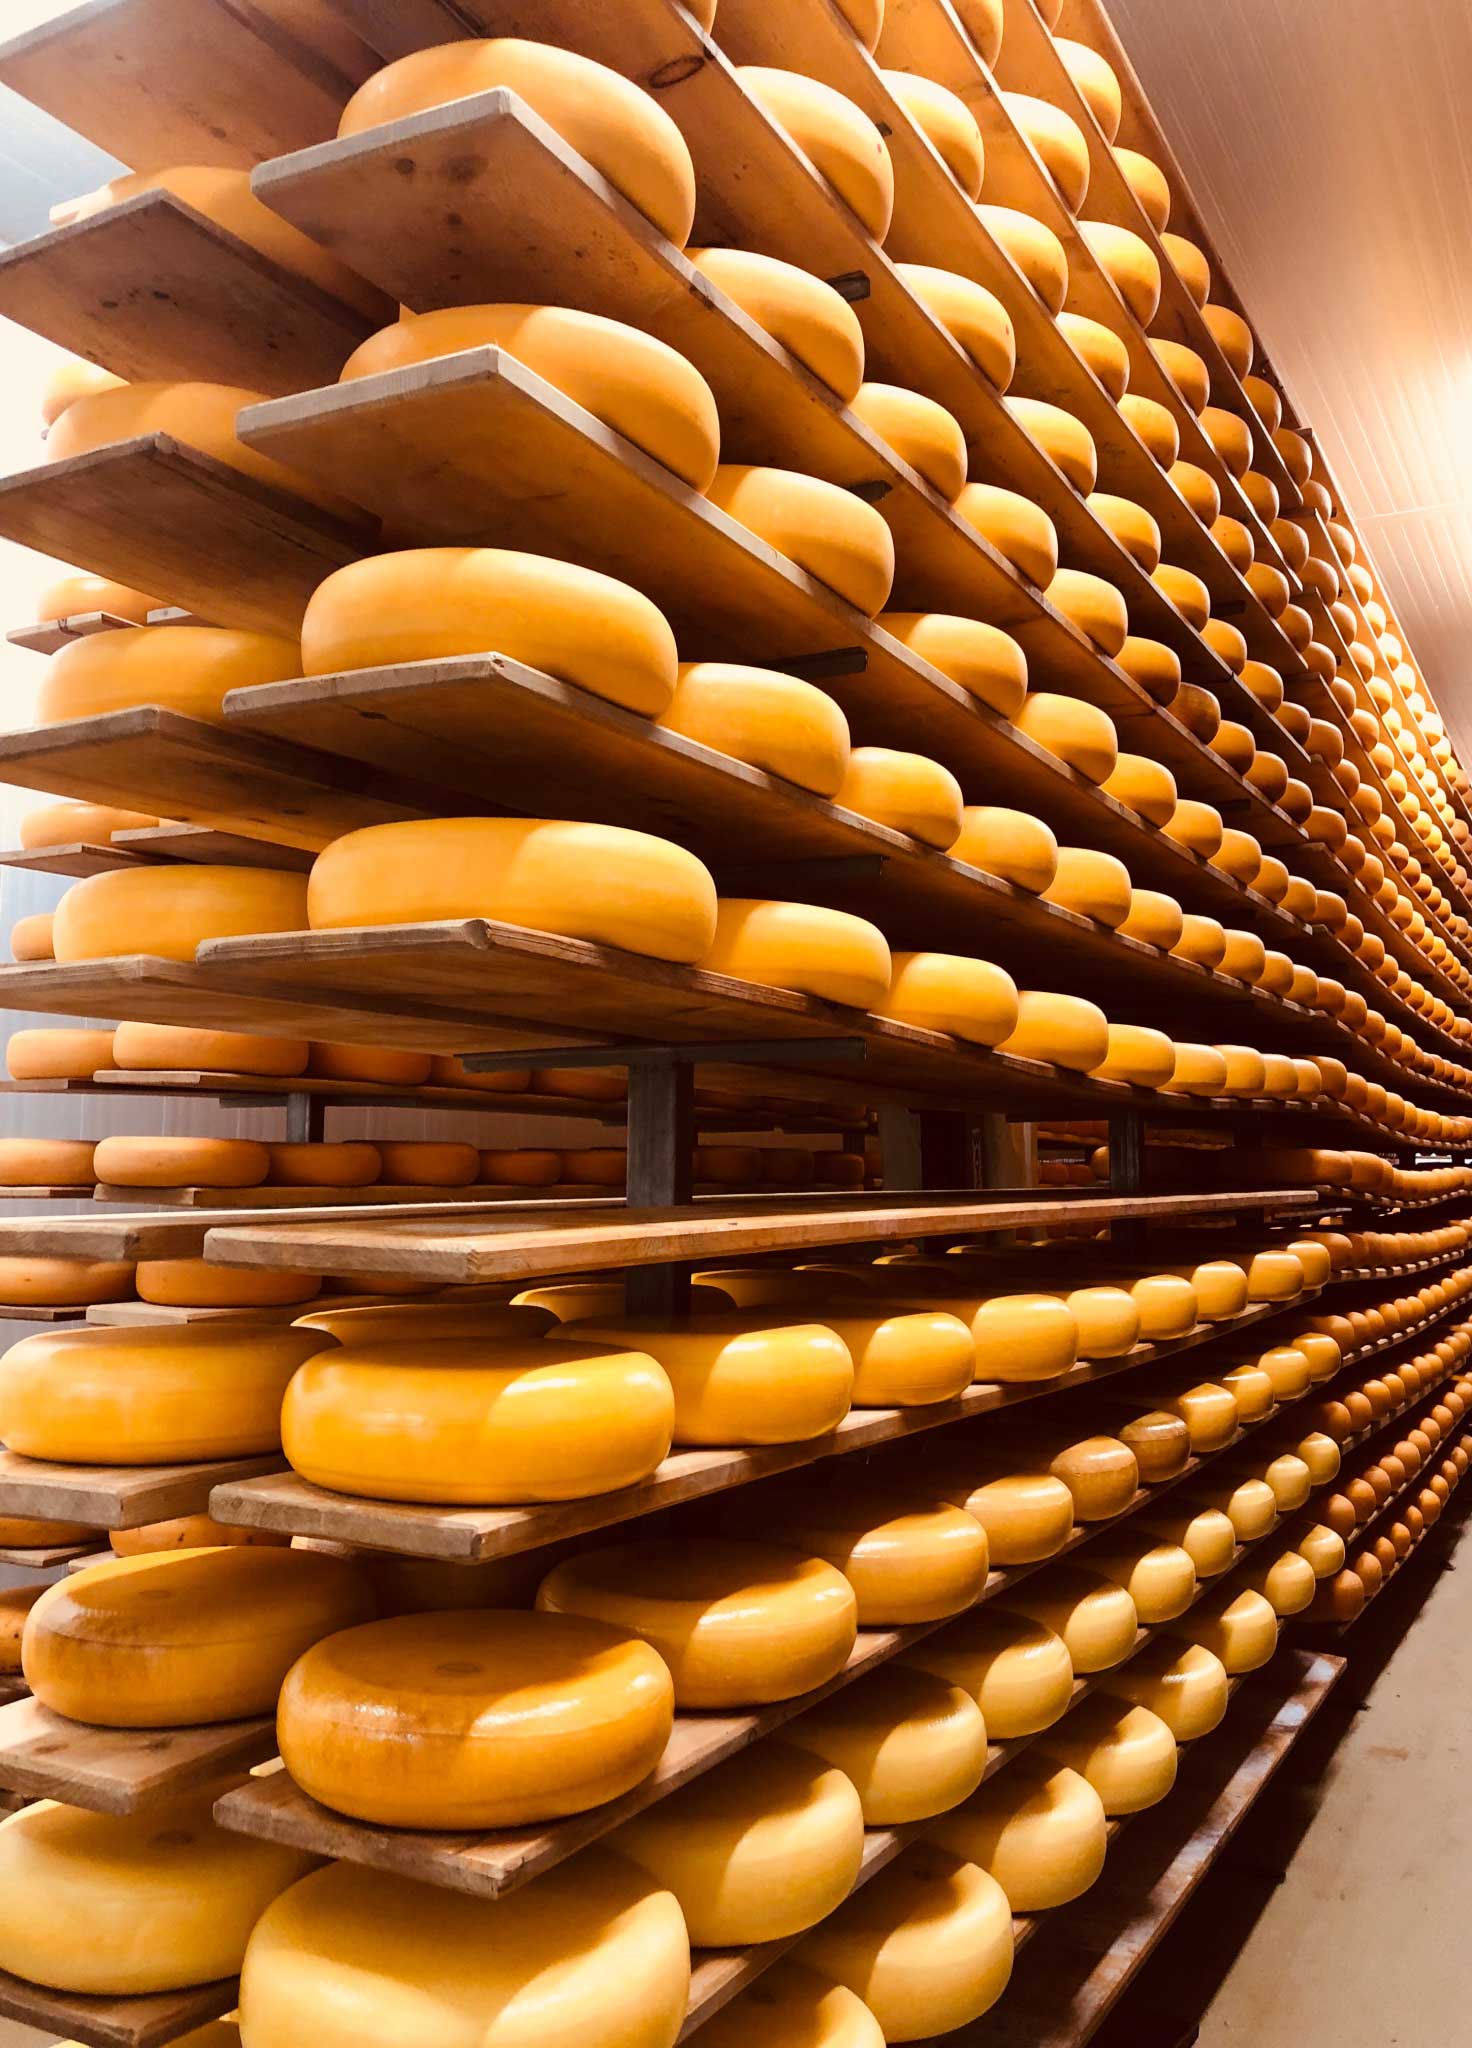 Mountainoak cheese